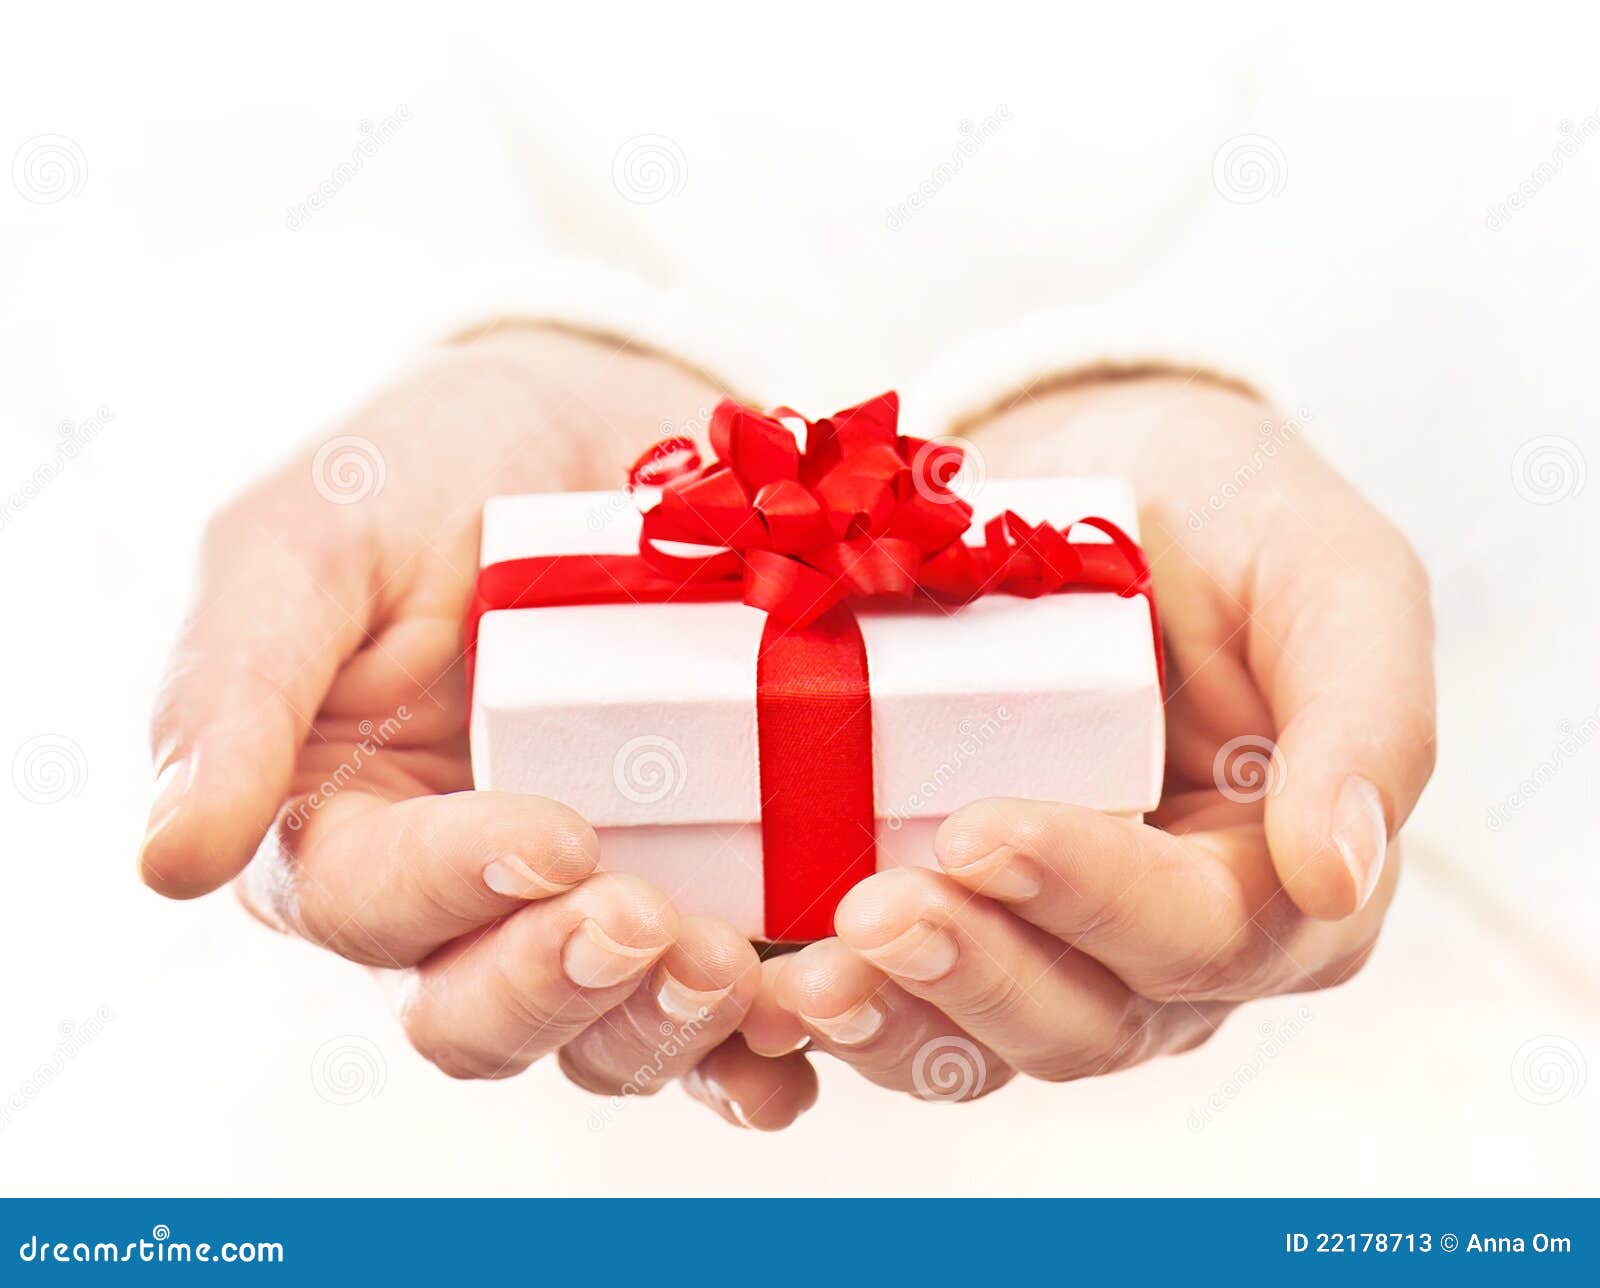 hands-holding-beautiful-gift-box-22178713.jpg